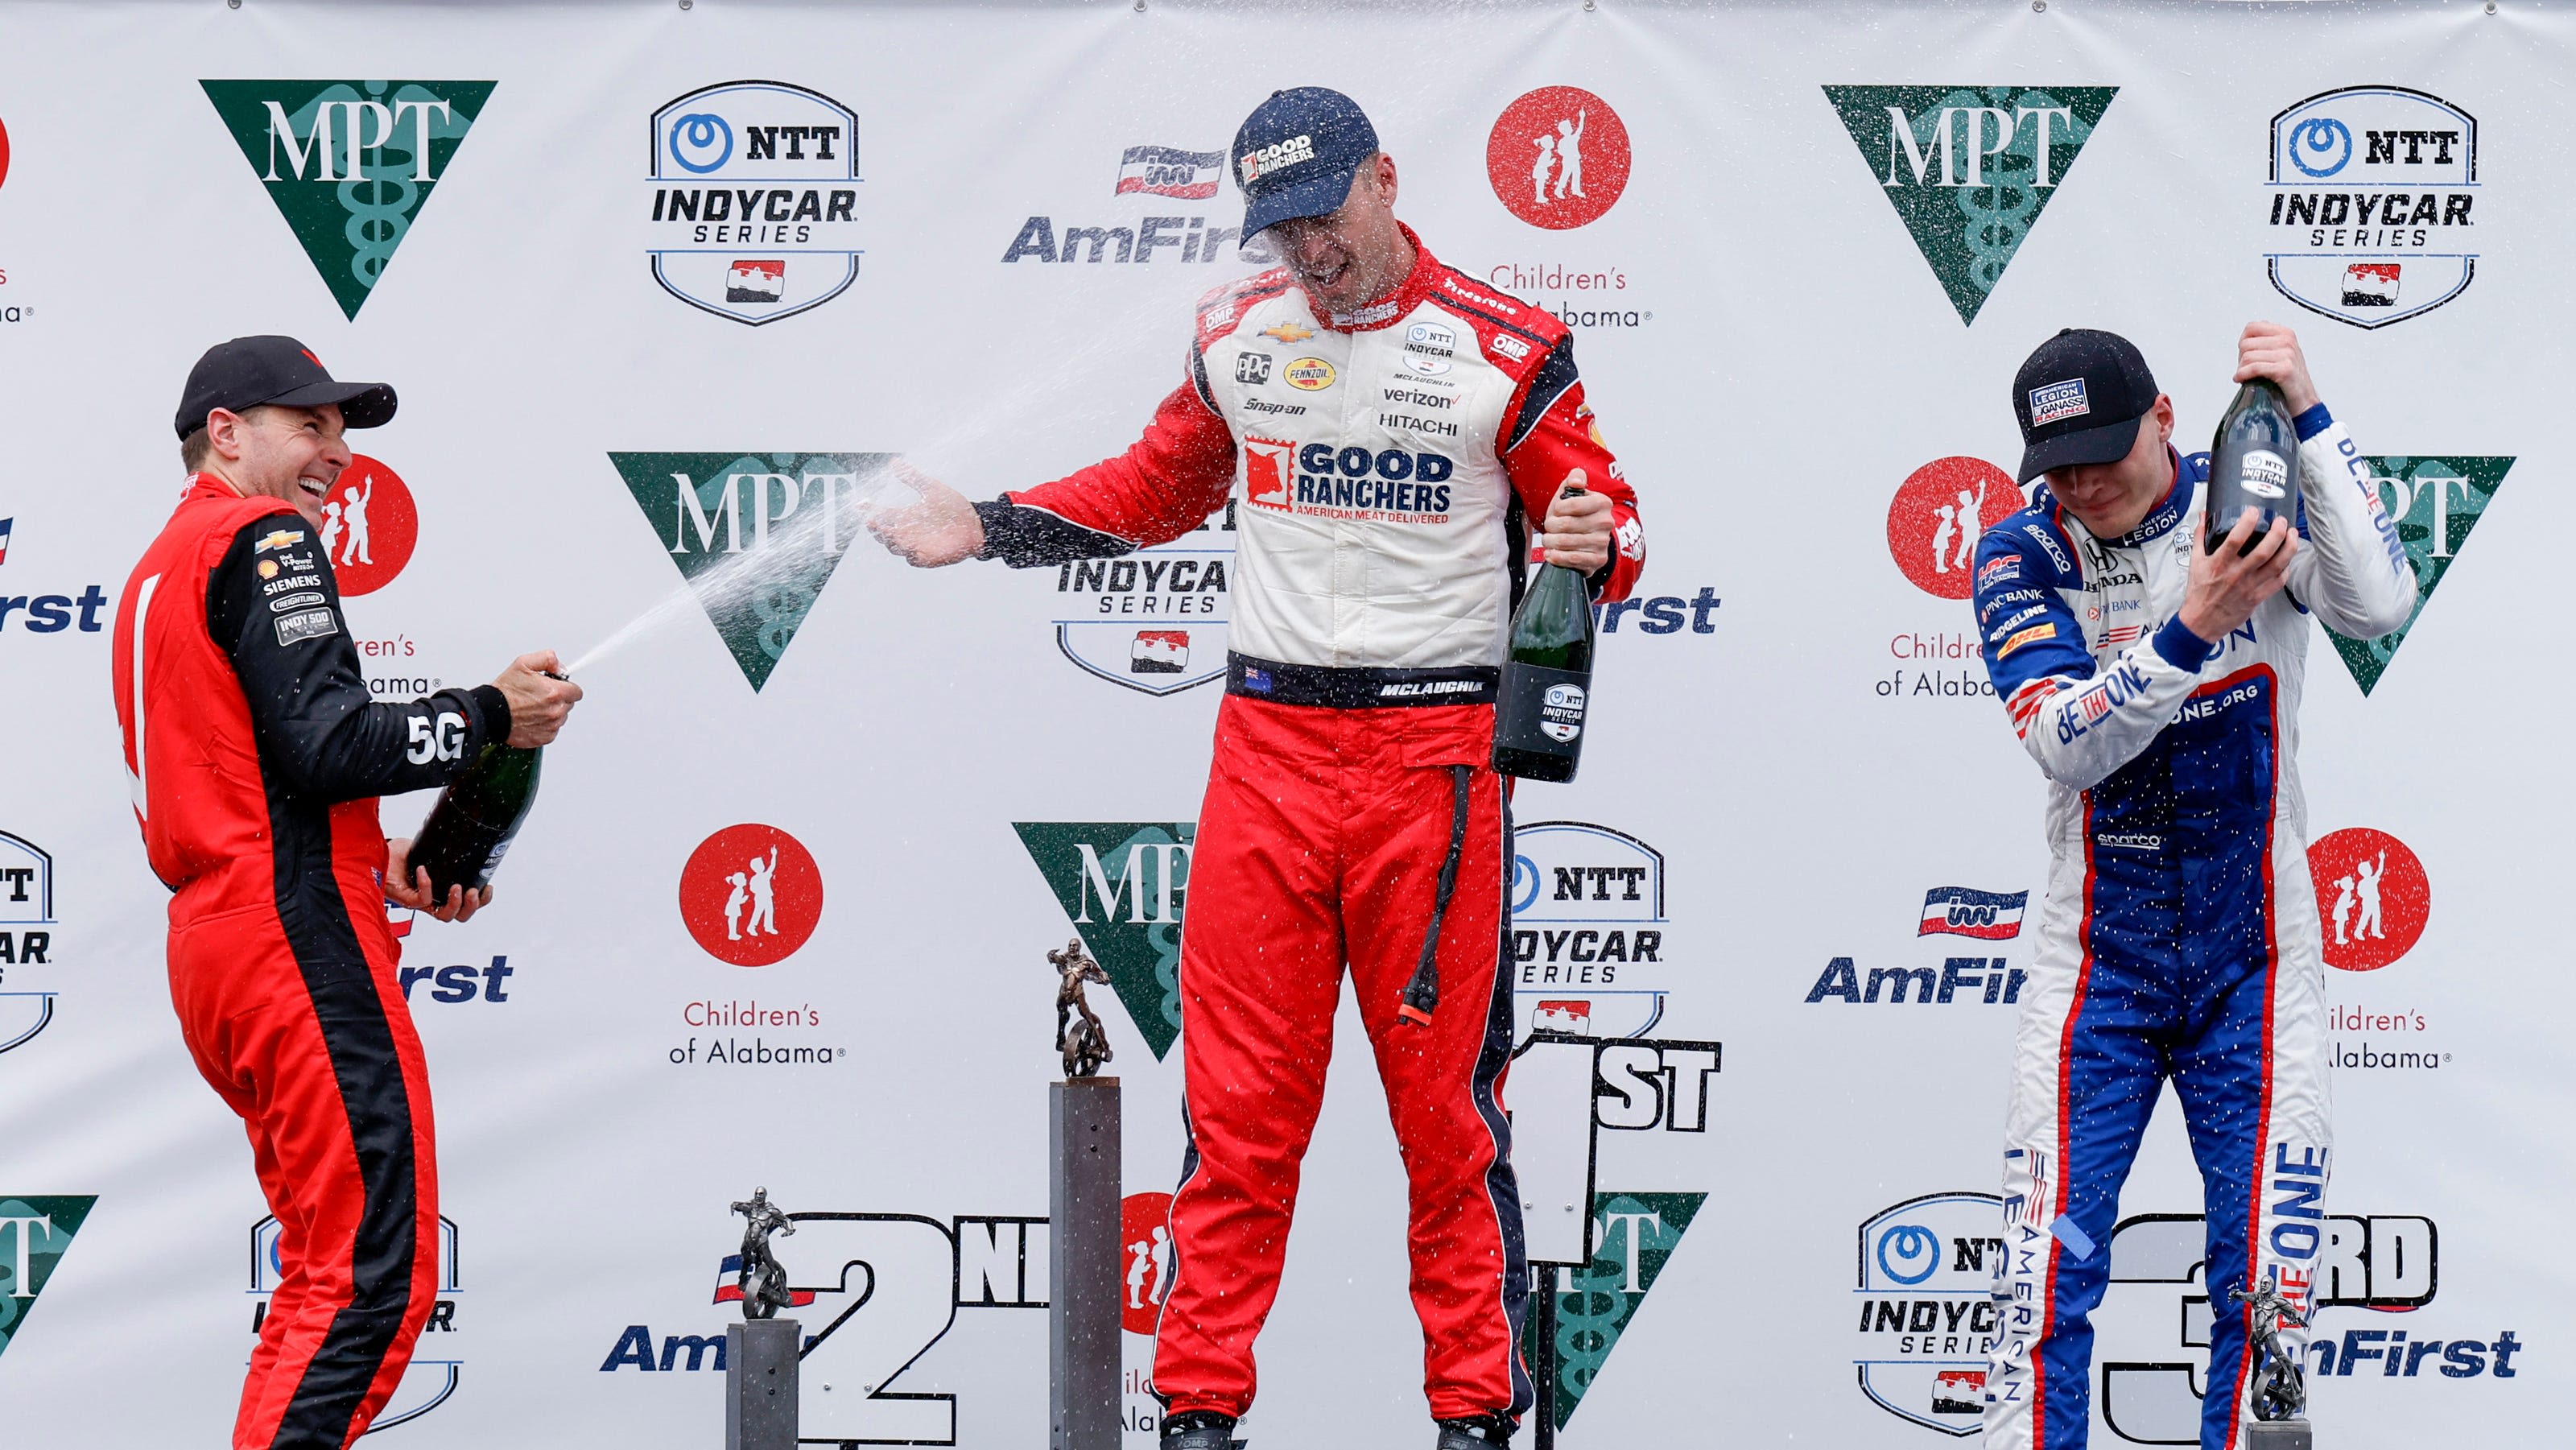 Race recap: Scott McLaughlin defends Children's of Alabama Indy Grand Prix title